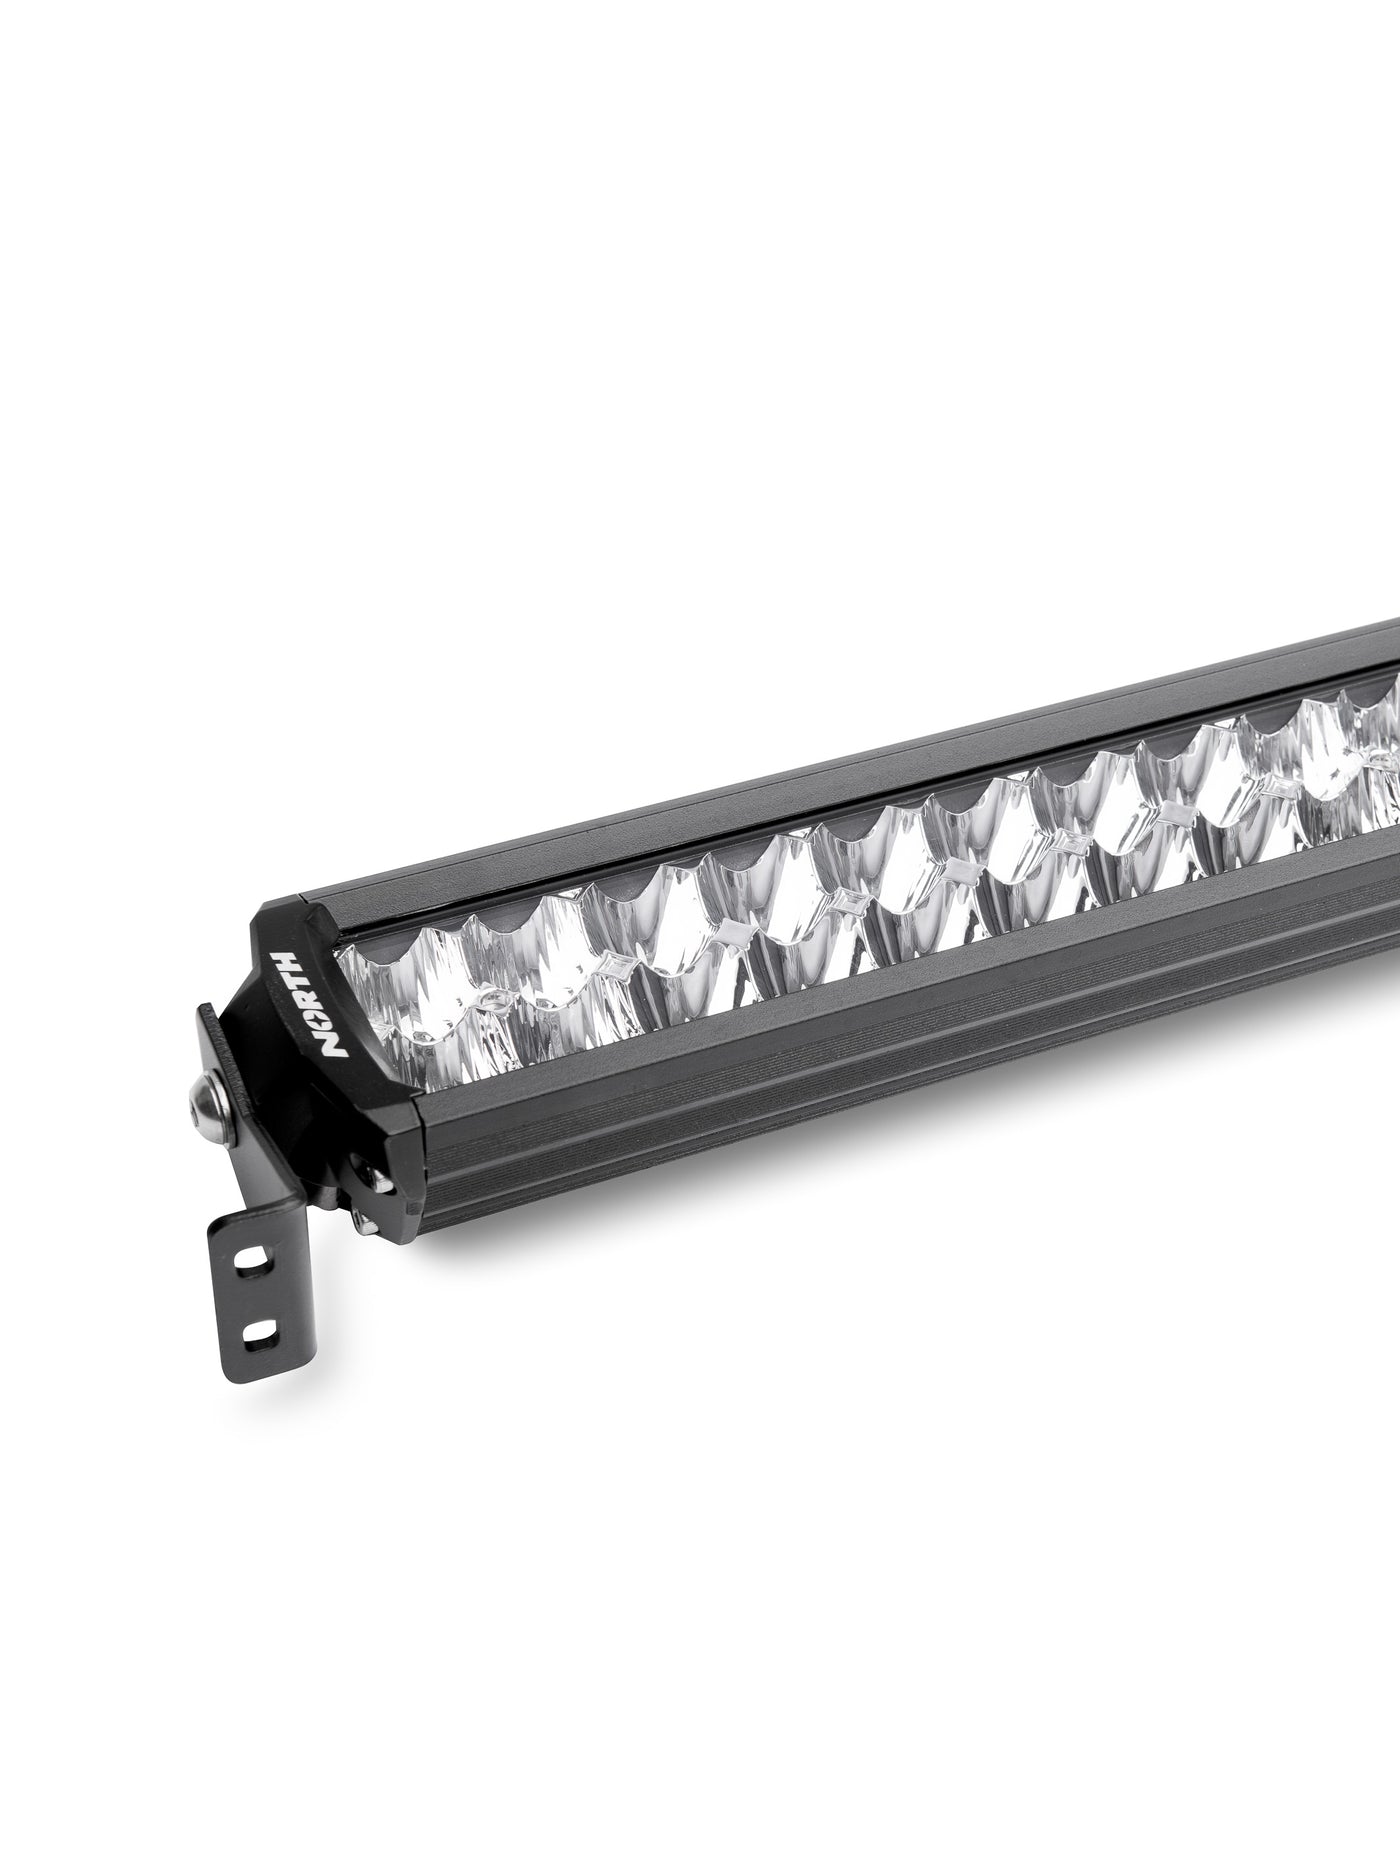 50" Dual Row LED Light Bar - Flood/Spot Beam Combo - North Lights